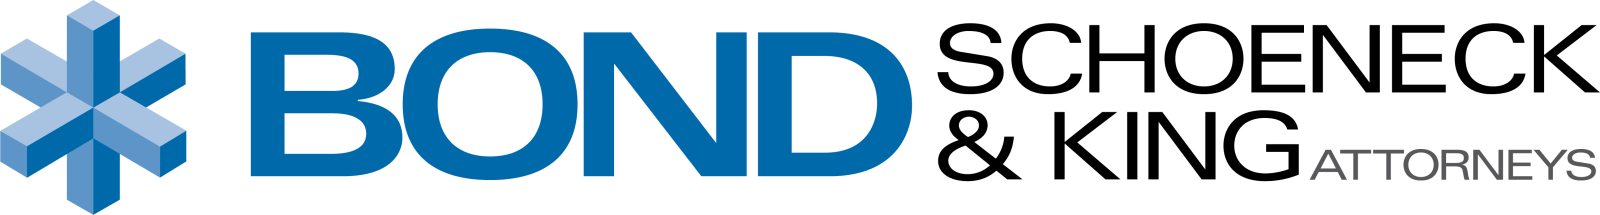 Bond Logo - Long_4C